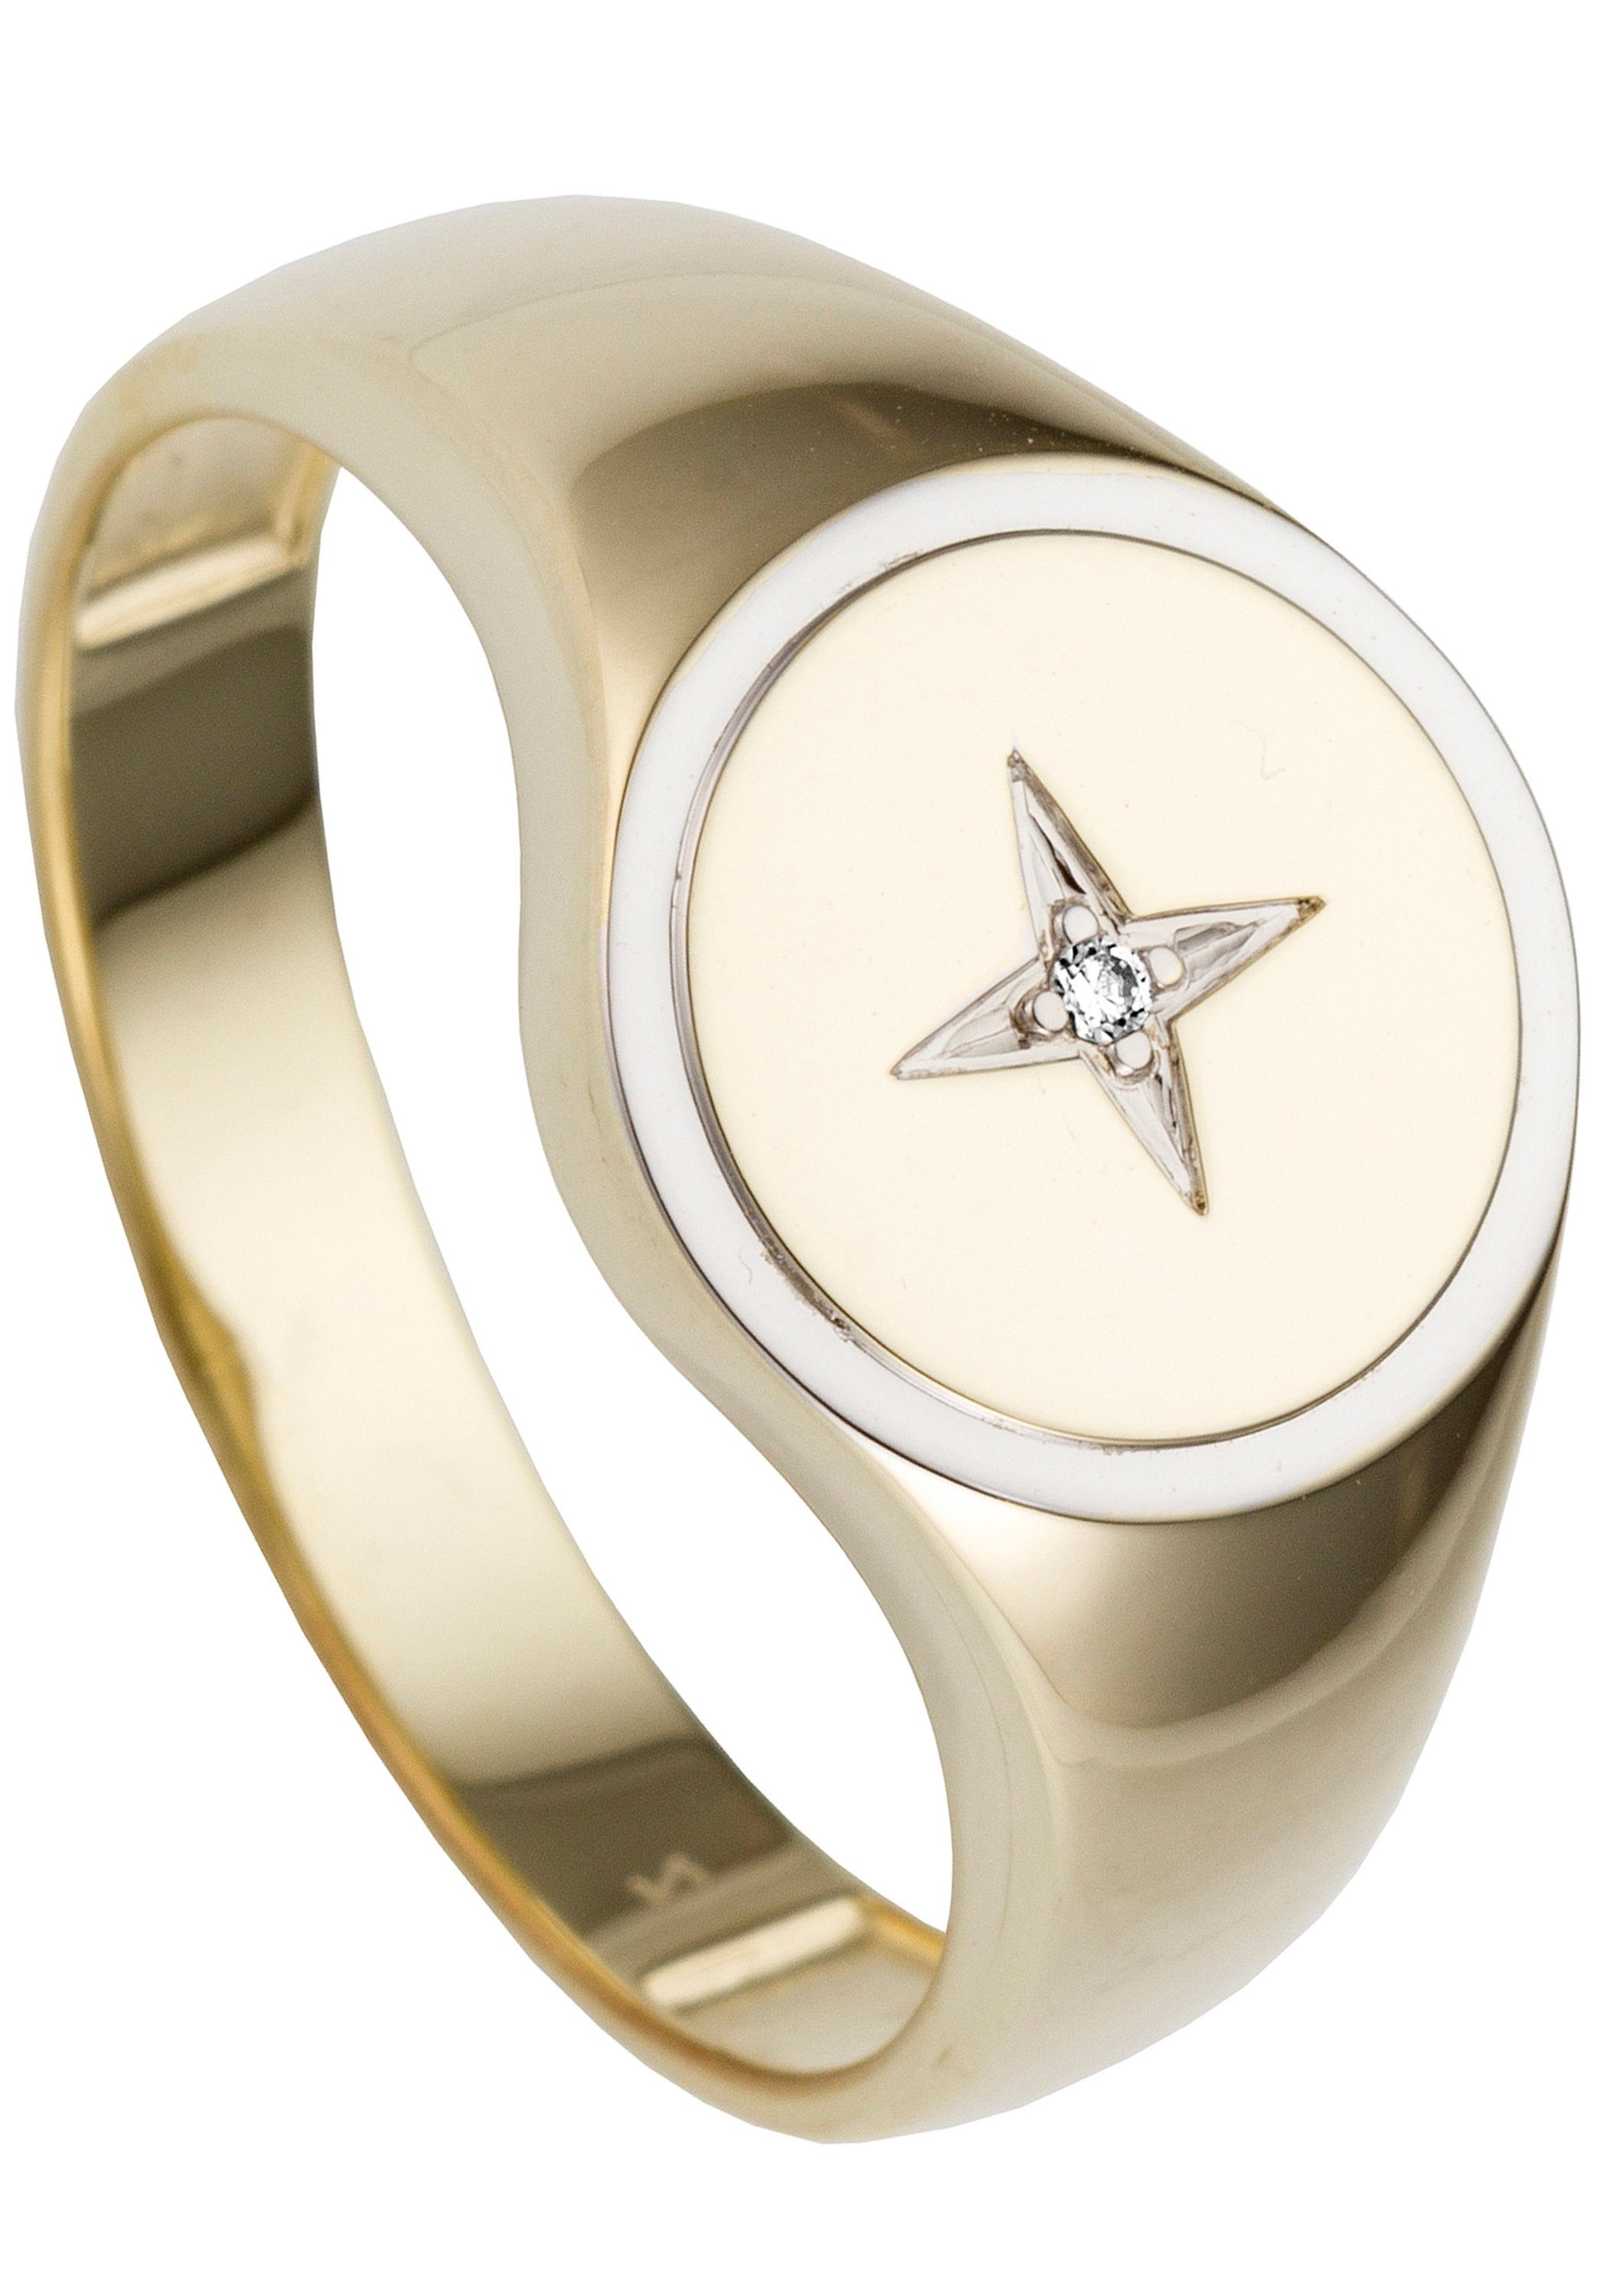 Gold mit Fingerring Ring bicolor Diamant, JOBO 585